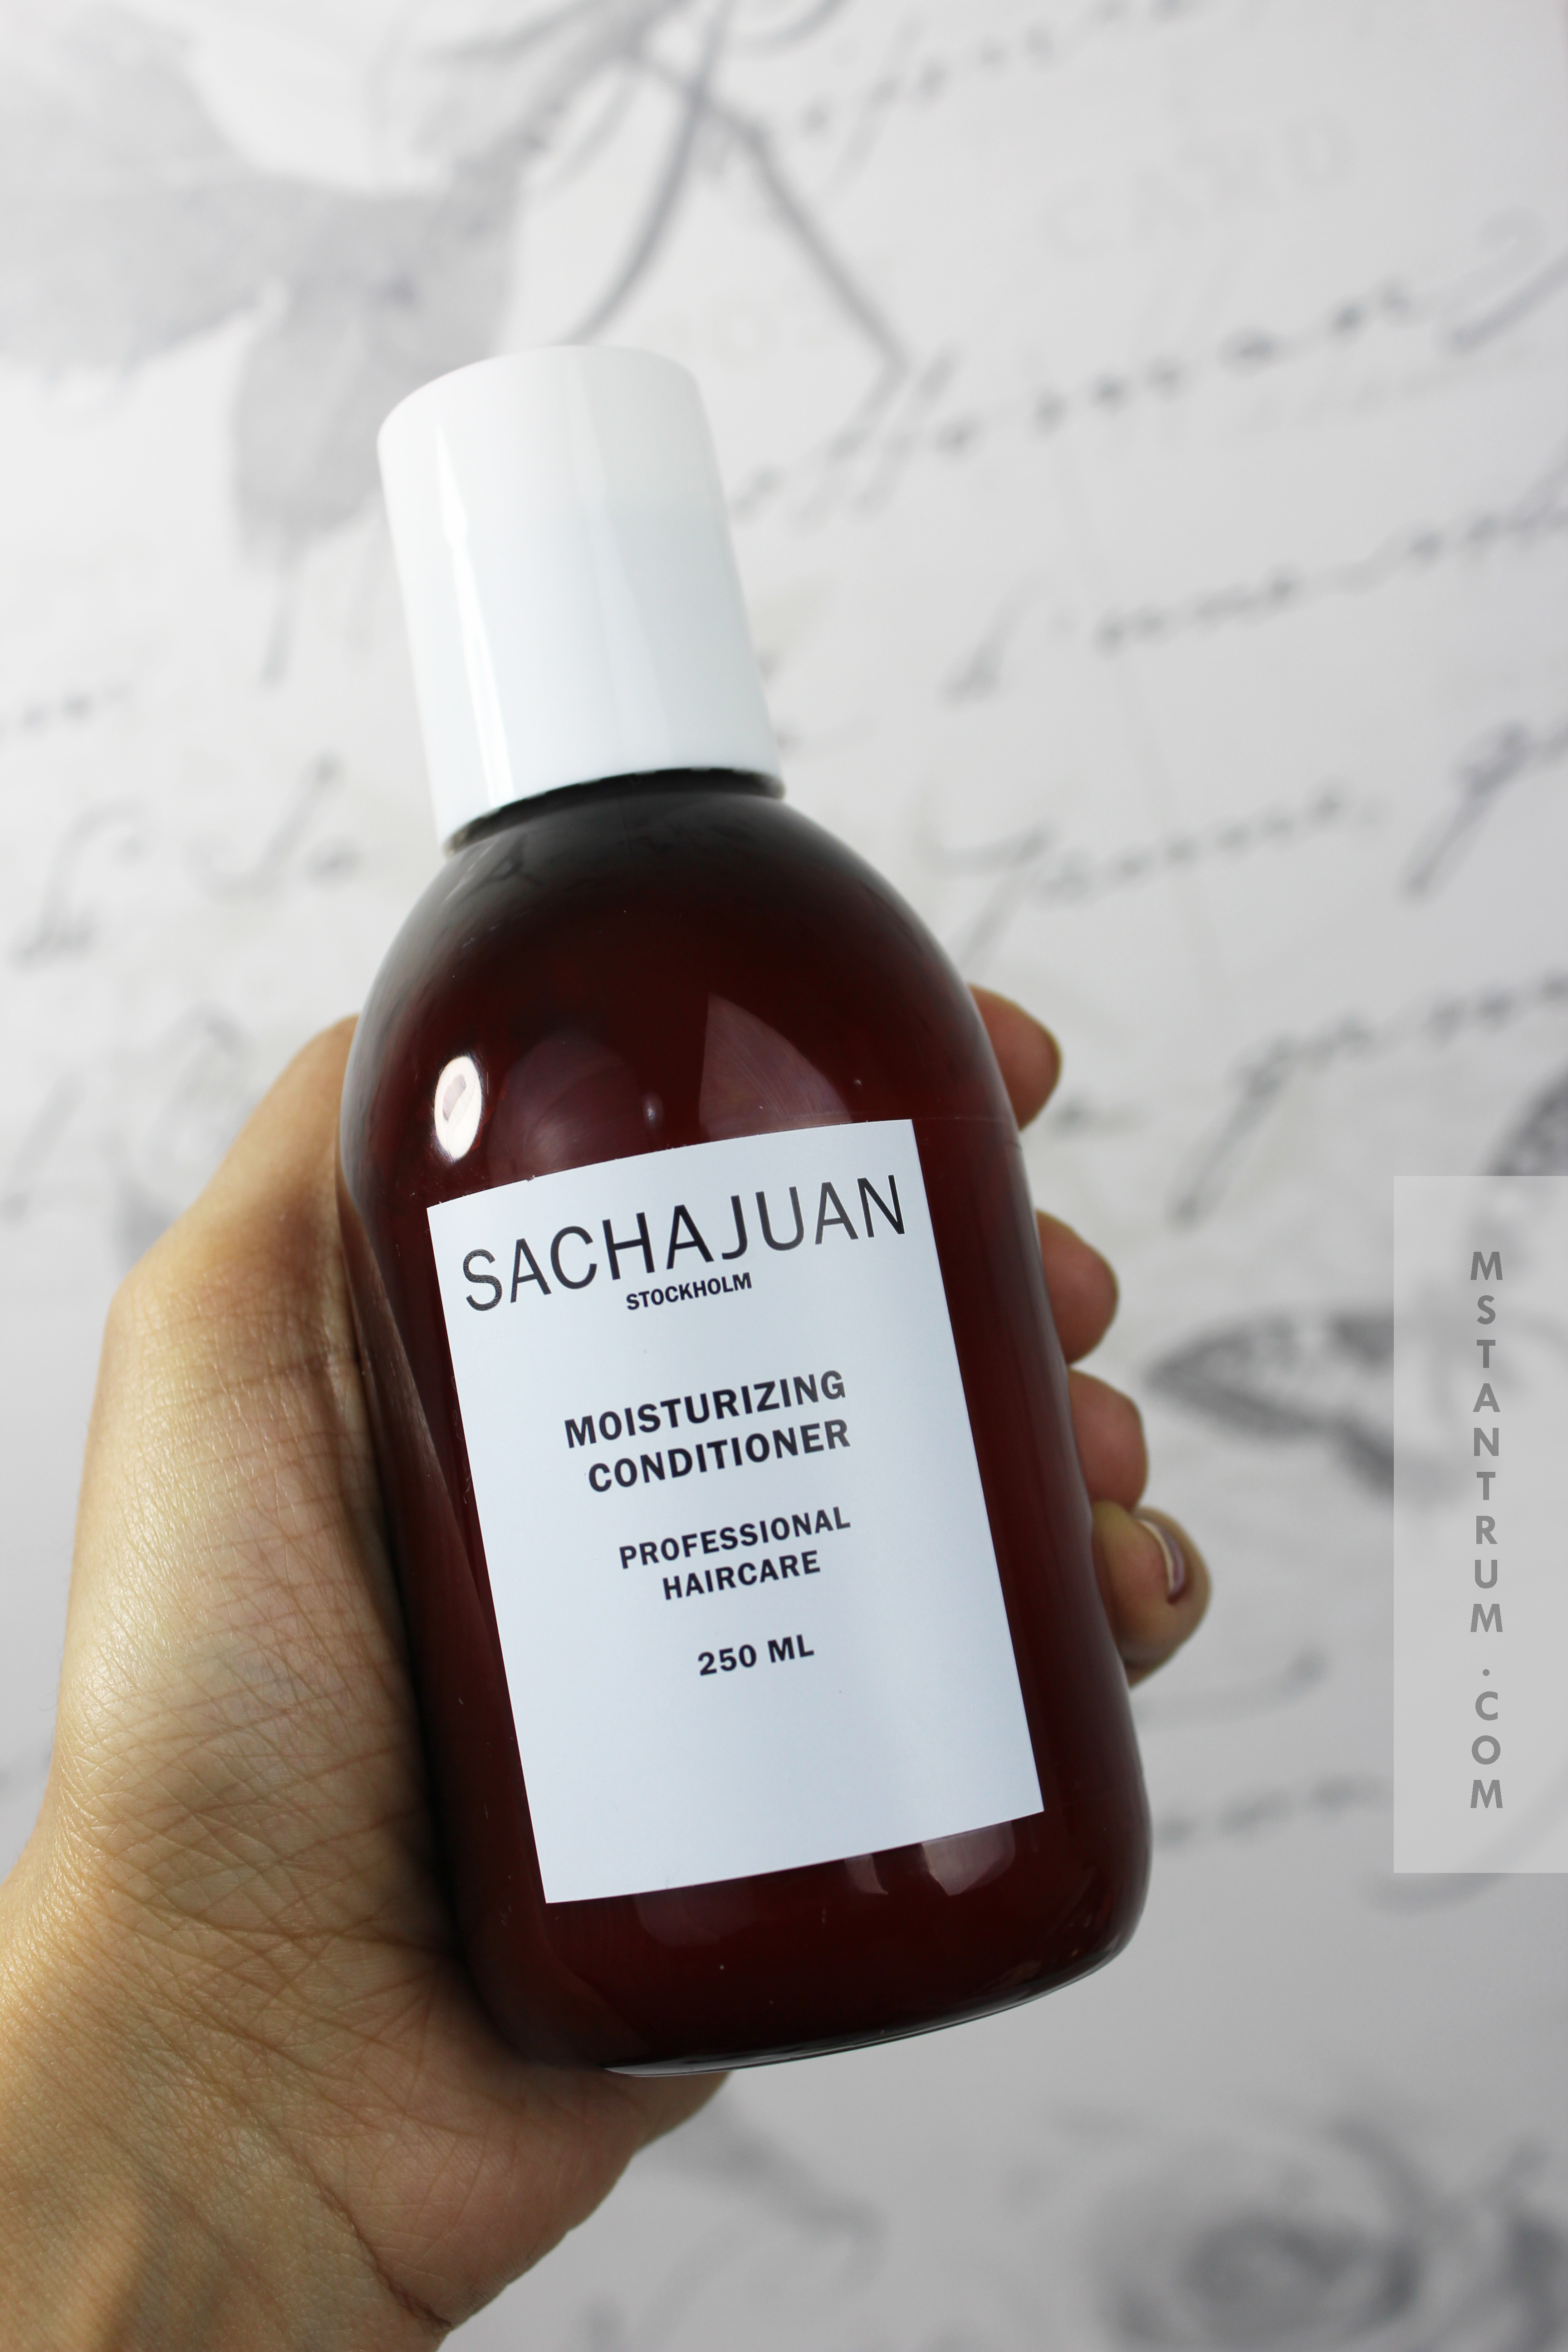 Sachajuan moisturizing conditioner